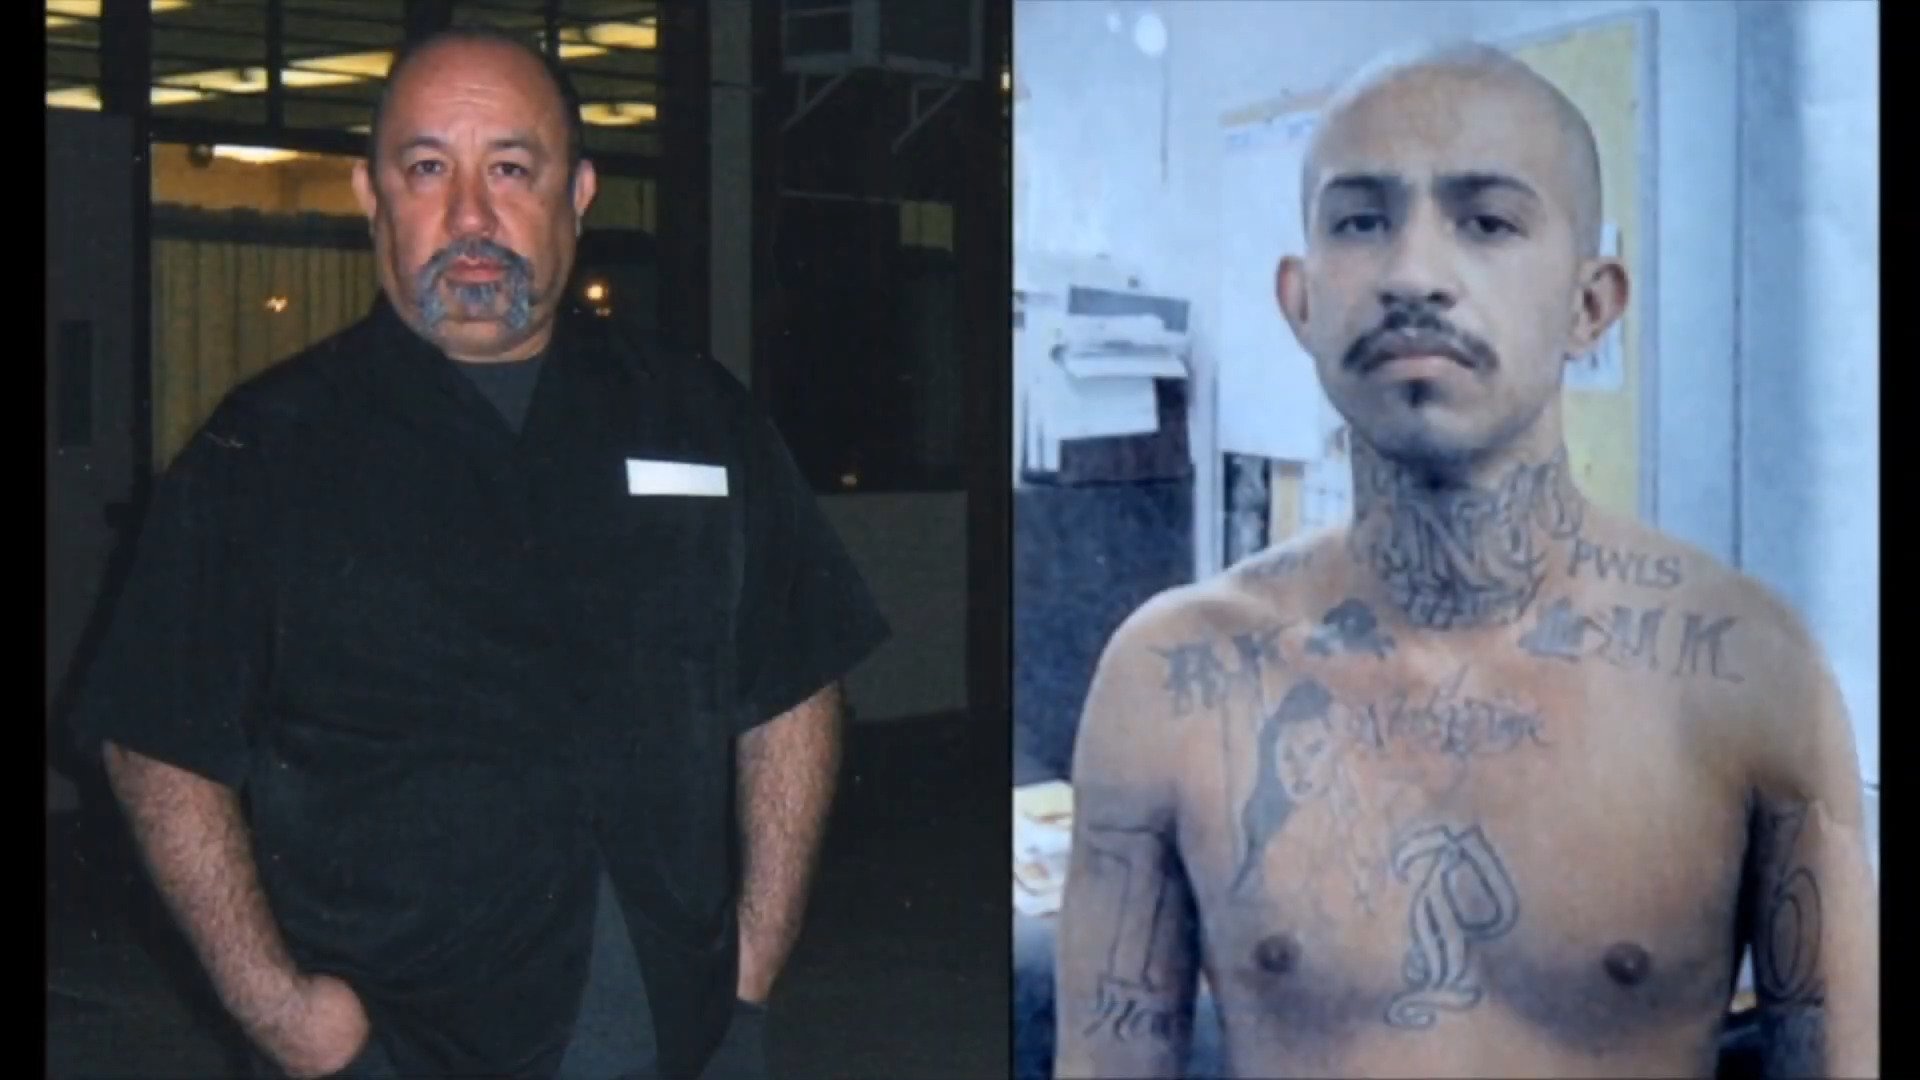 Image of Frank Mendoza compared to Cedric Ramirez